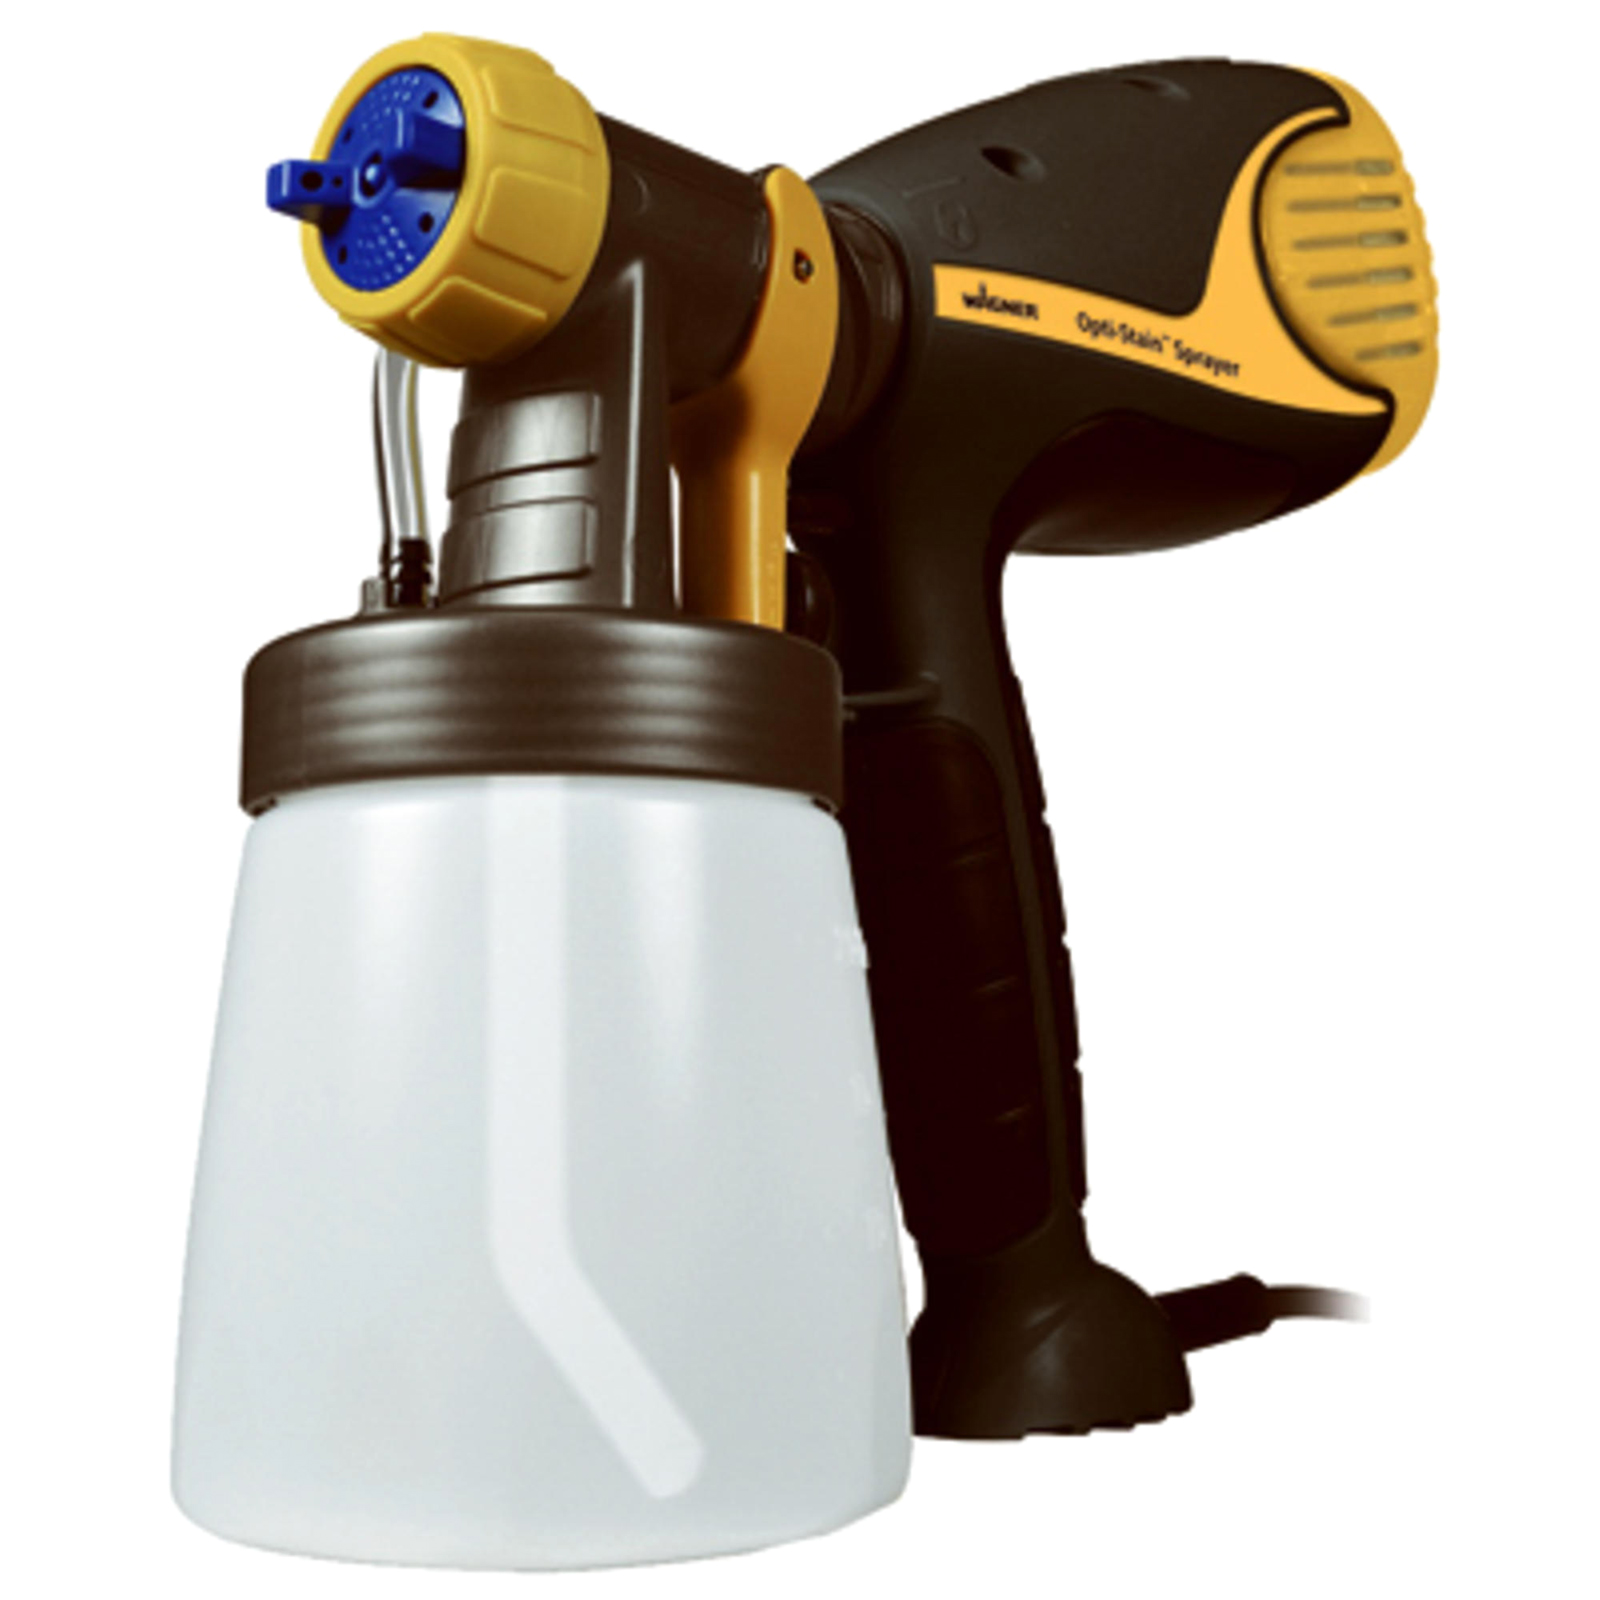 WAGNER SPRAY TECH 529015 Opti-Stain Handheld Sprayer with 3 Spray Patterns